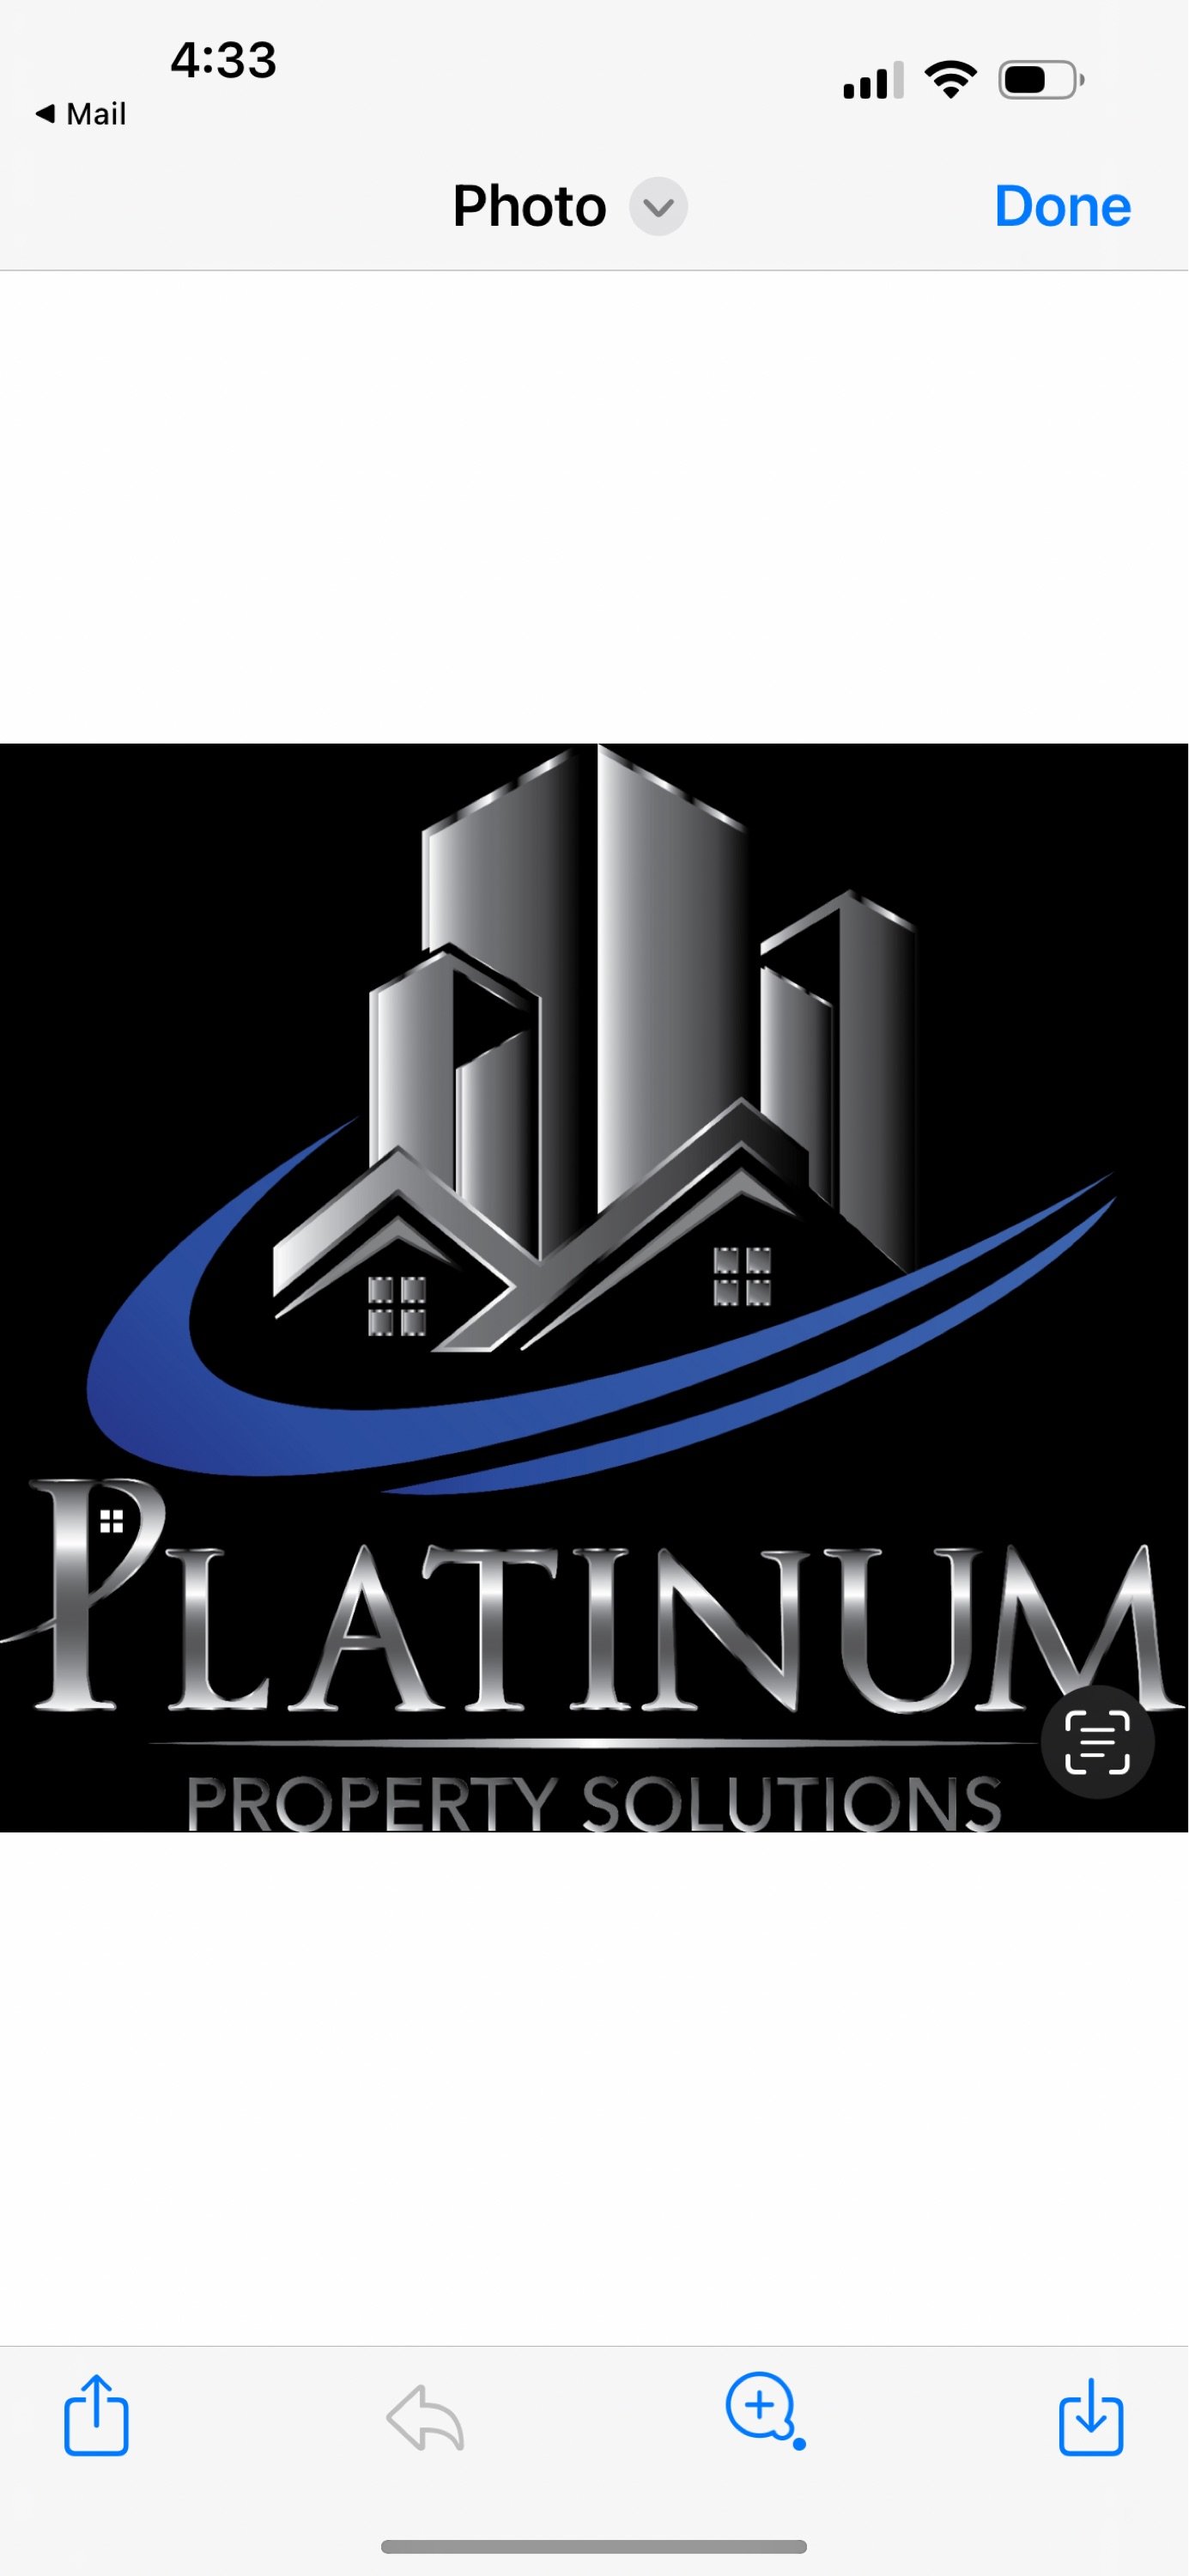 Platinum Property Solutions Logo